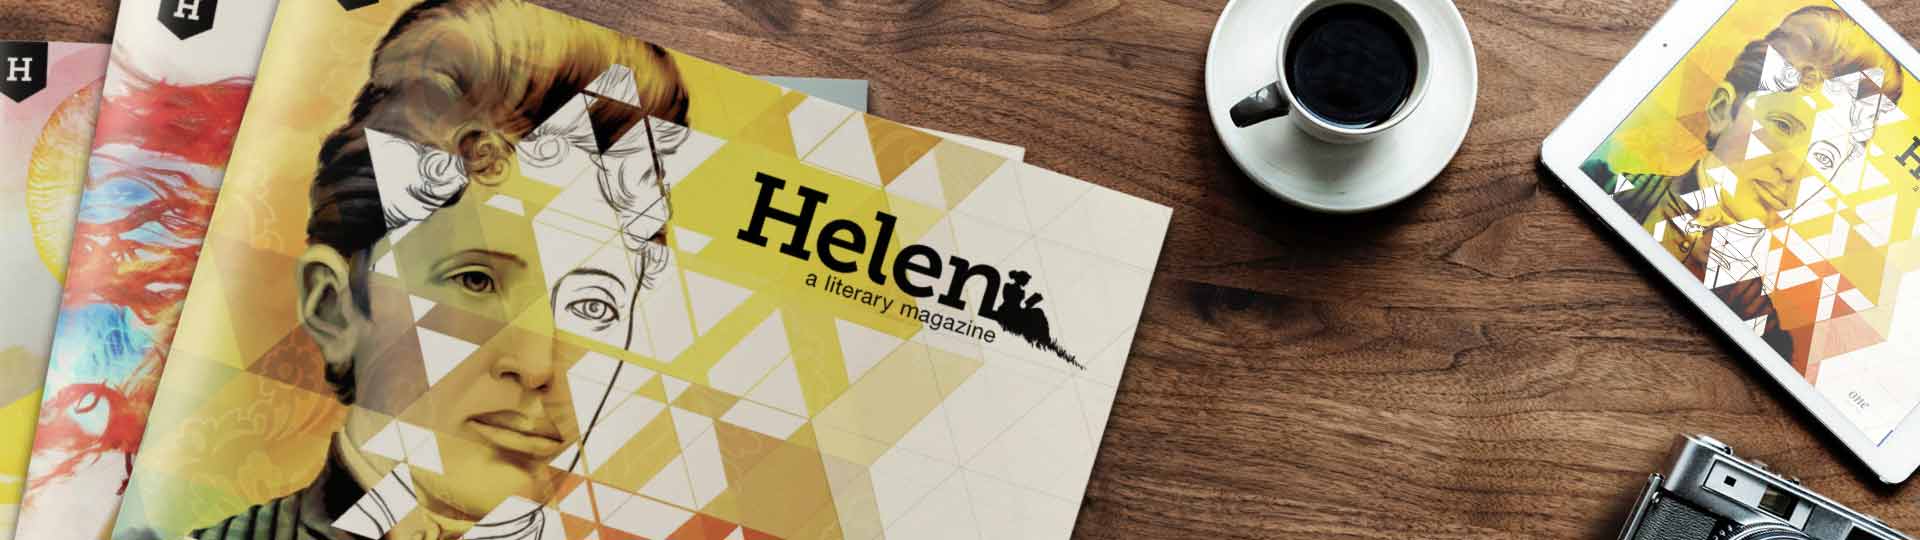 Helen: A Literary Magazine